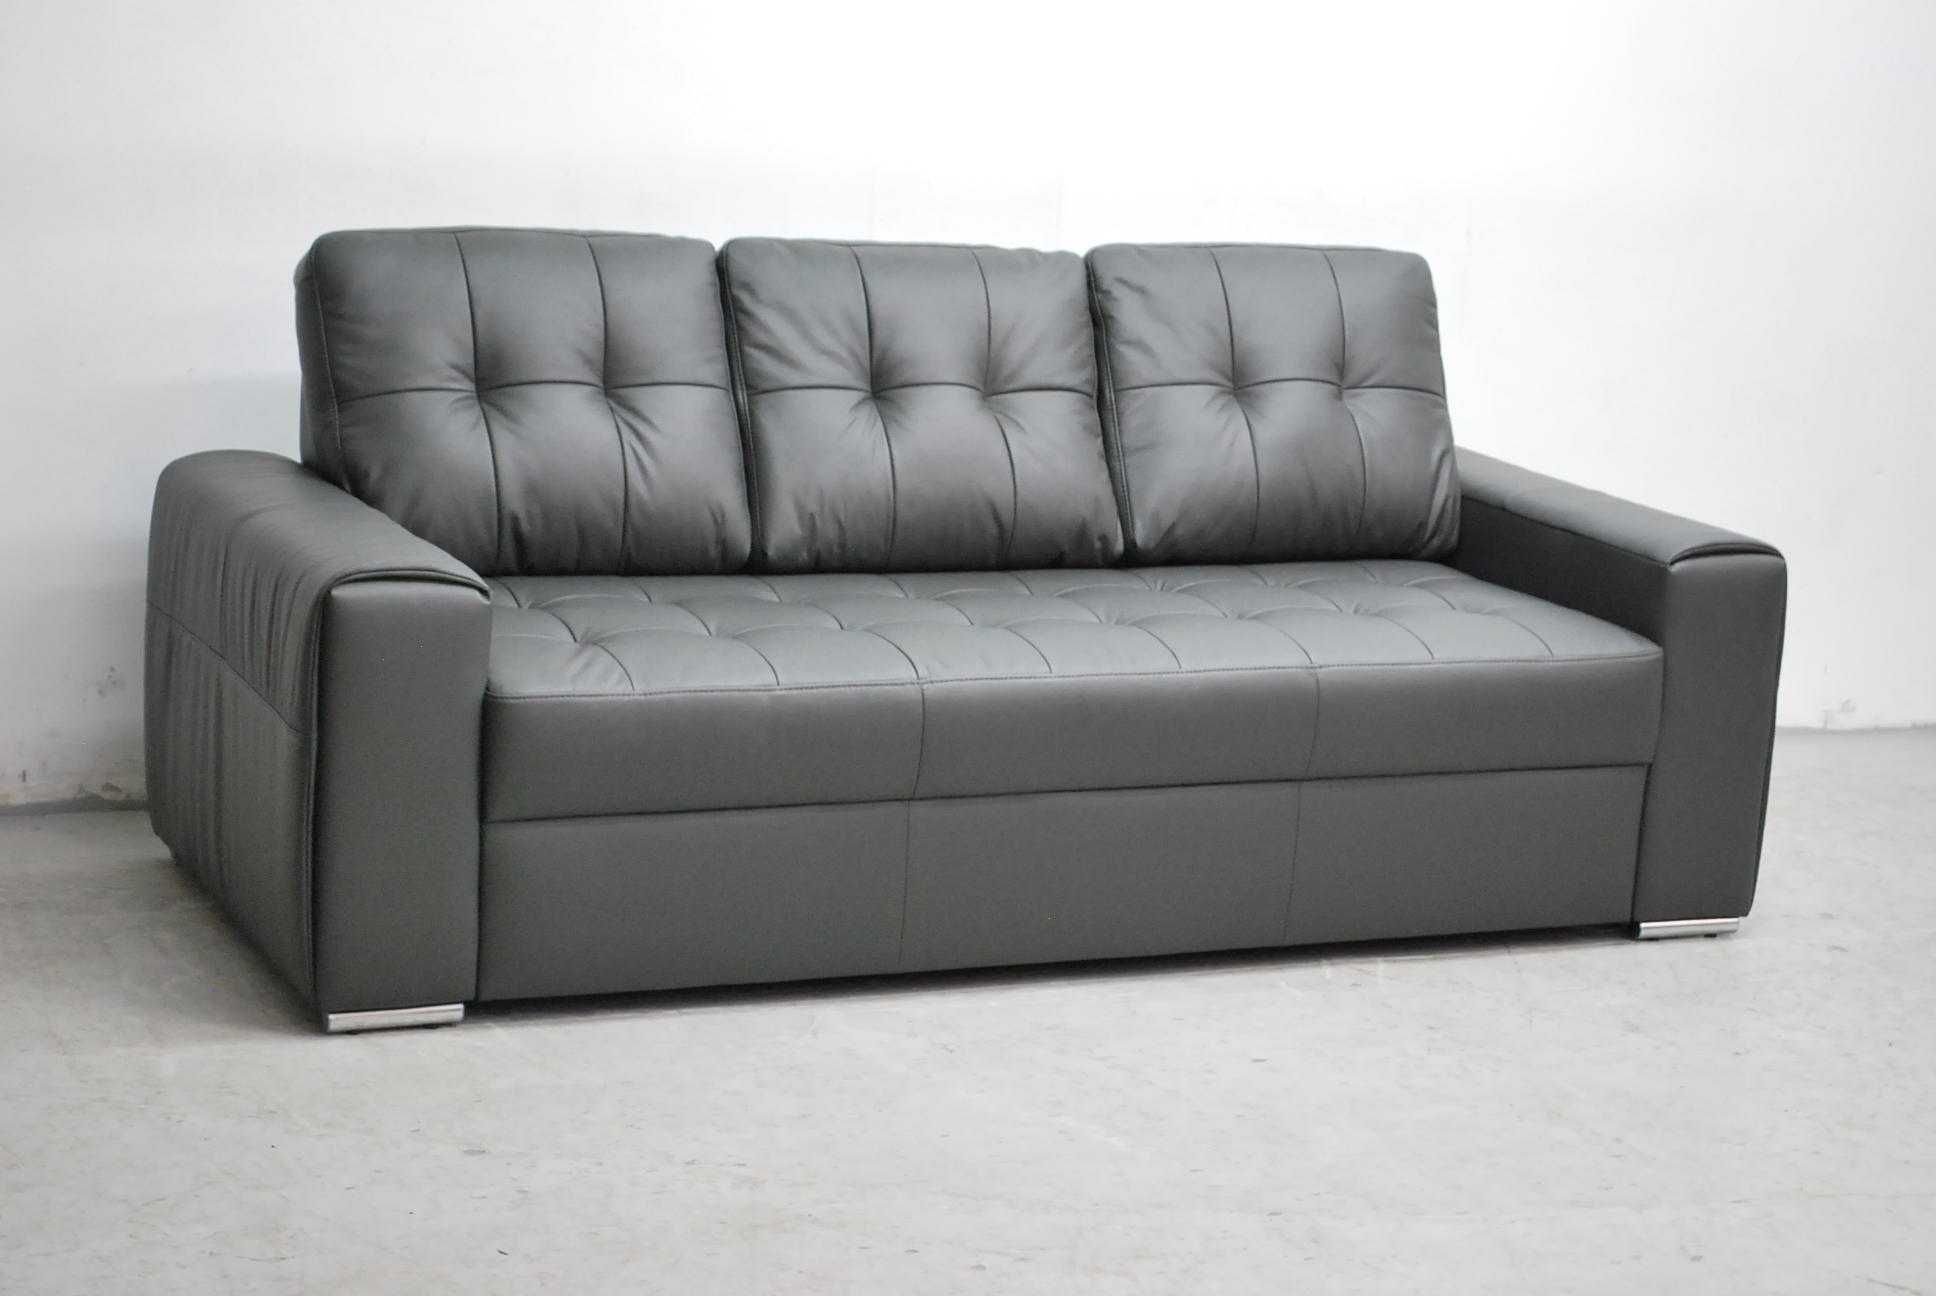 3 osobowa sofa, kanapa, SKÓRA naturalna 9117- osobowa, kanapa